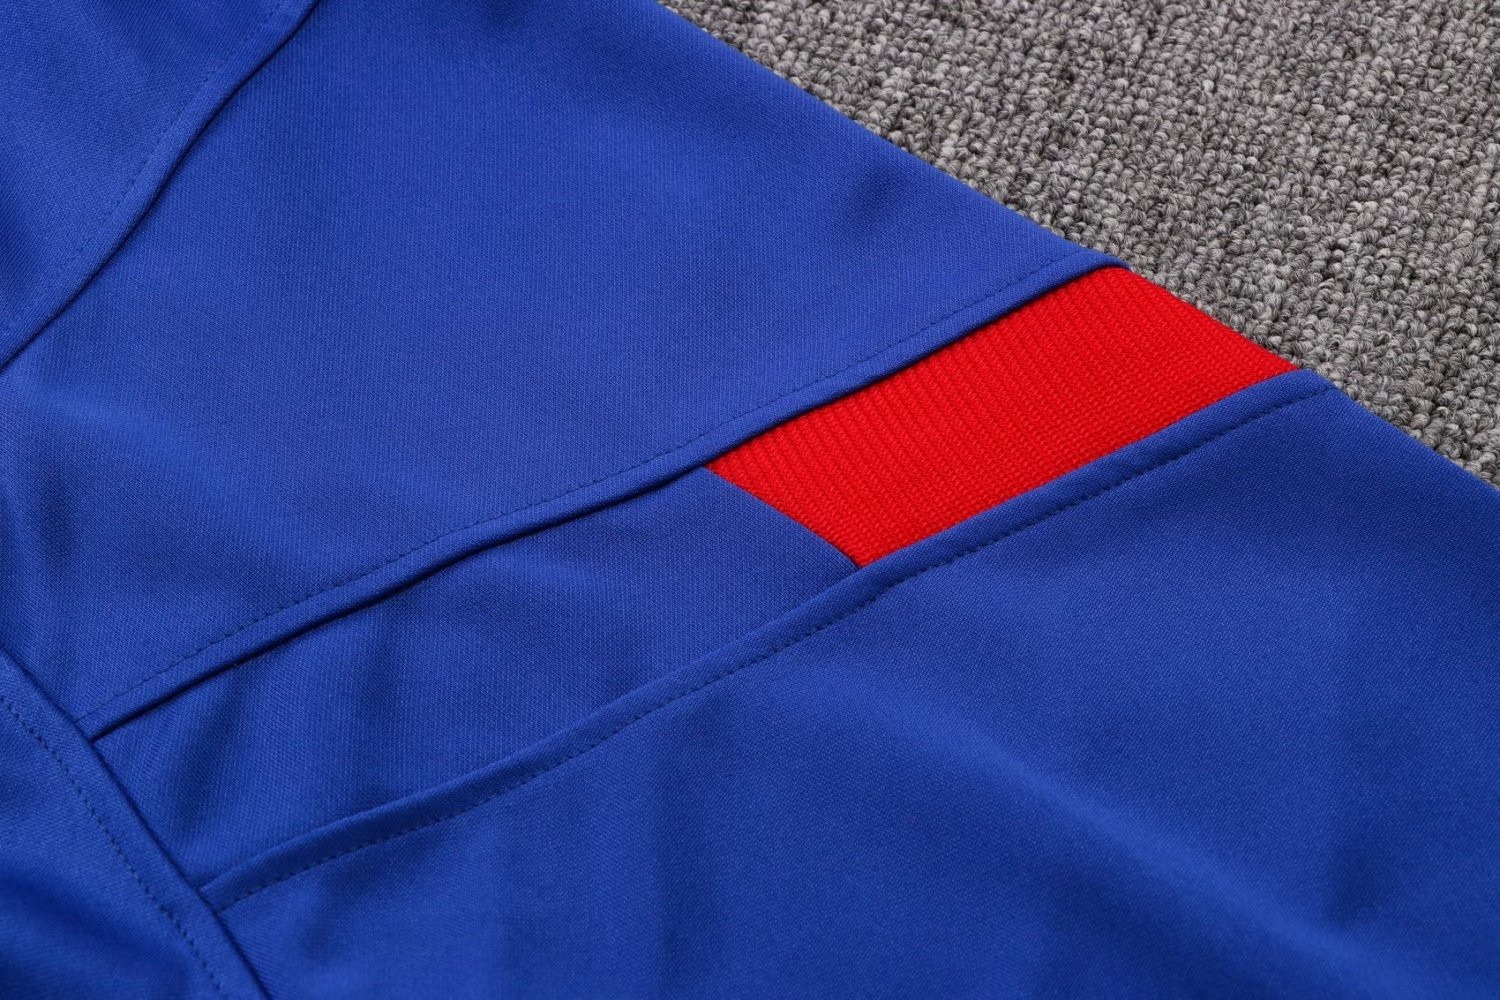 Atletico Madrid Soccer Training Suit Jacket + Pants Blue Mens 2021/22